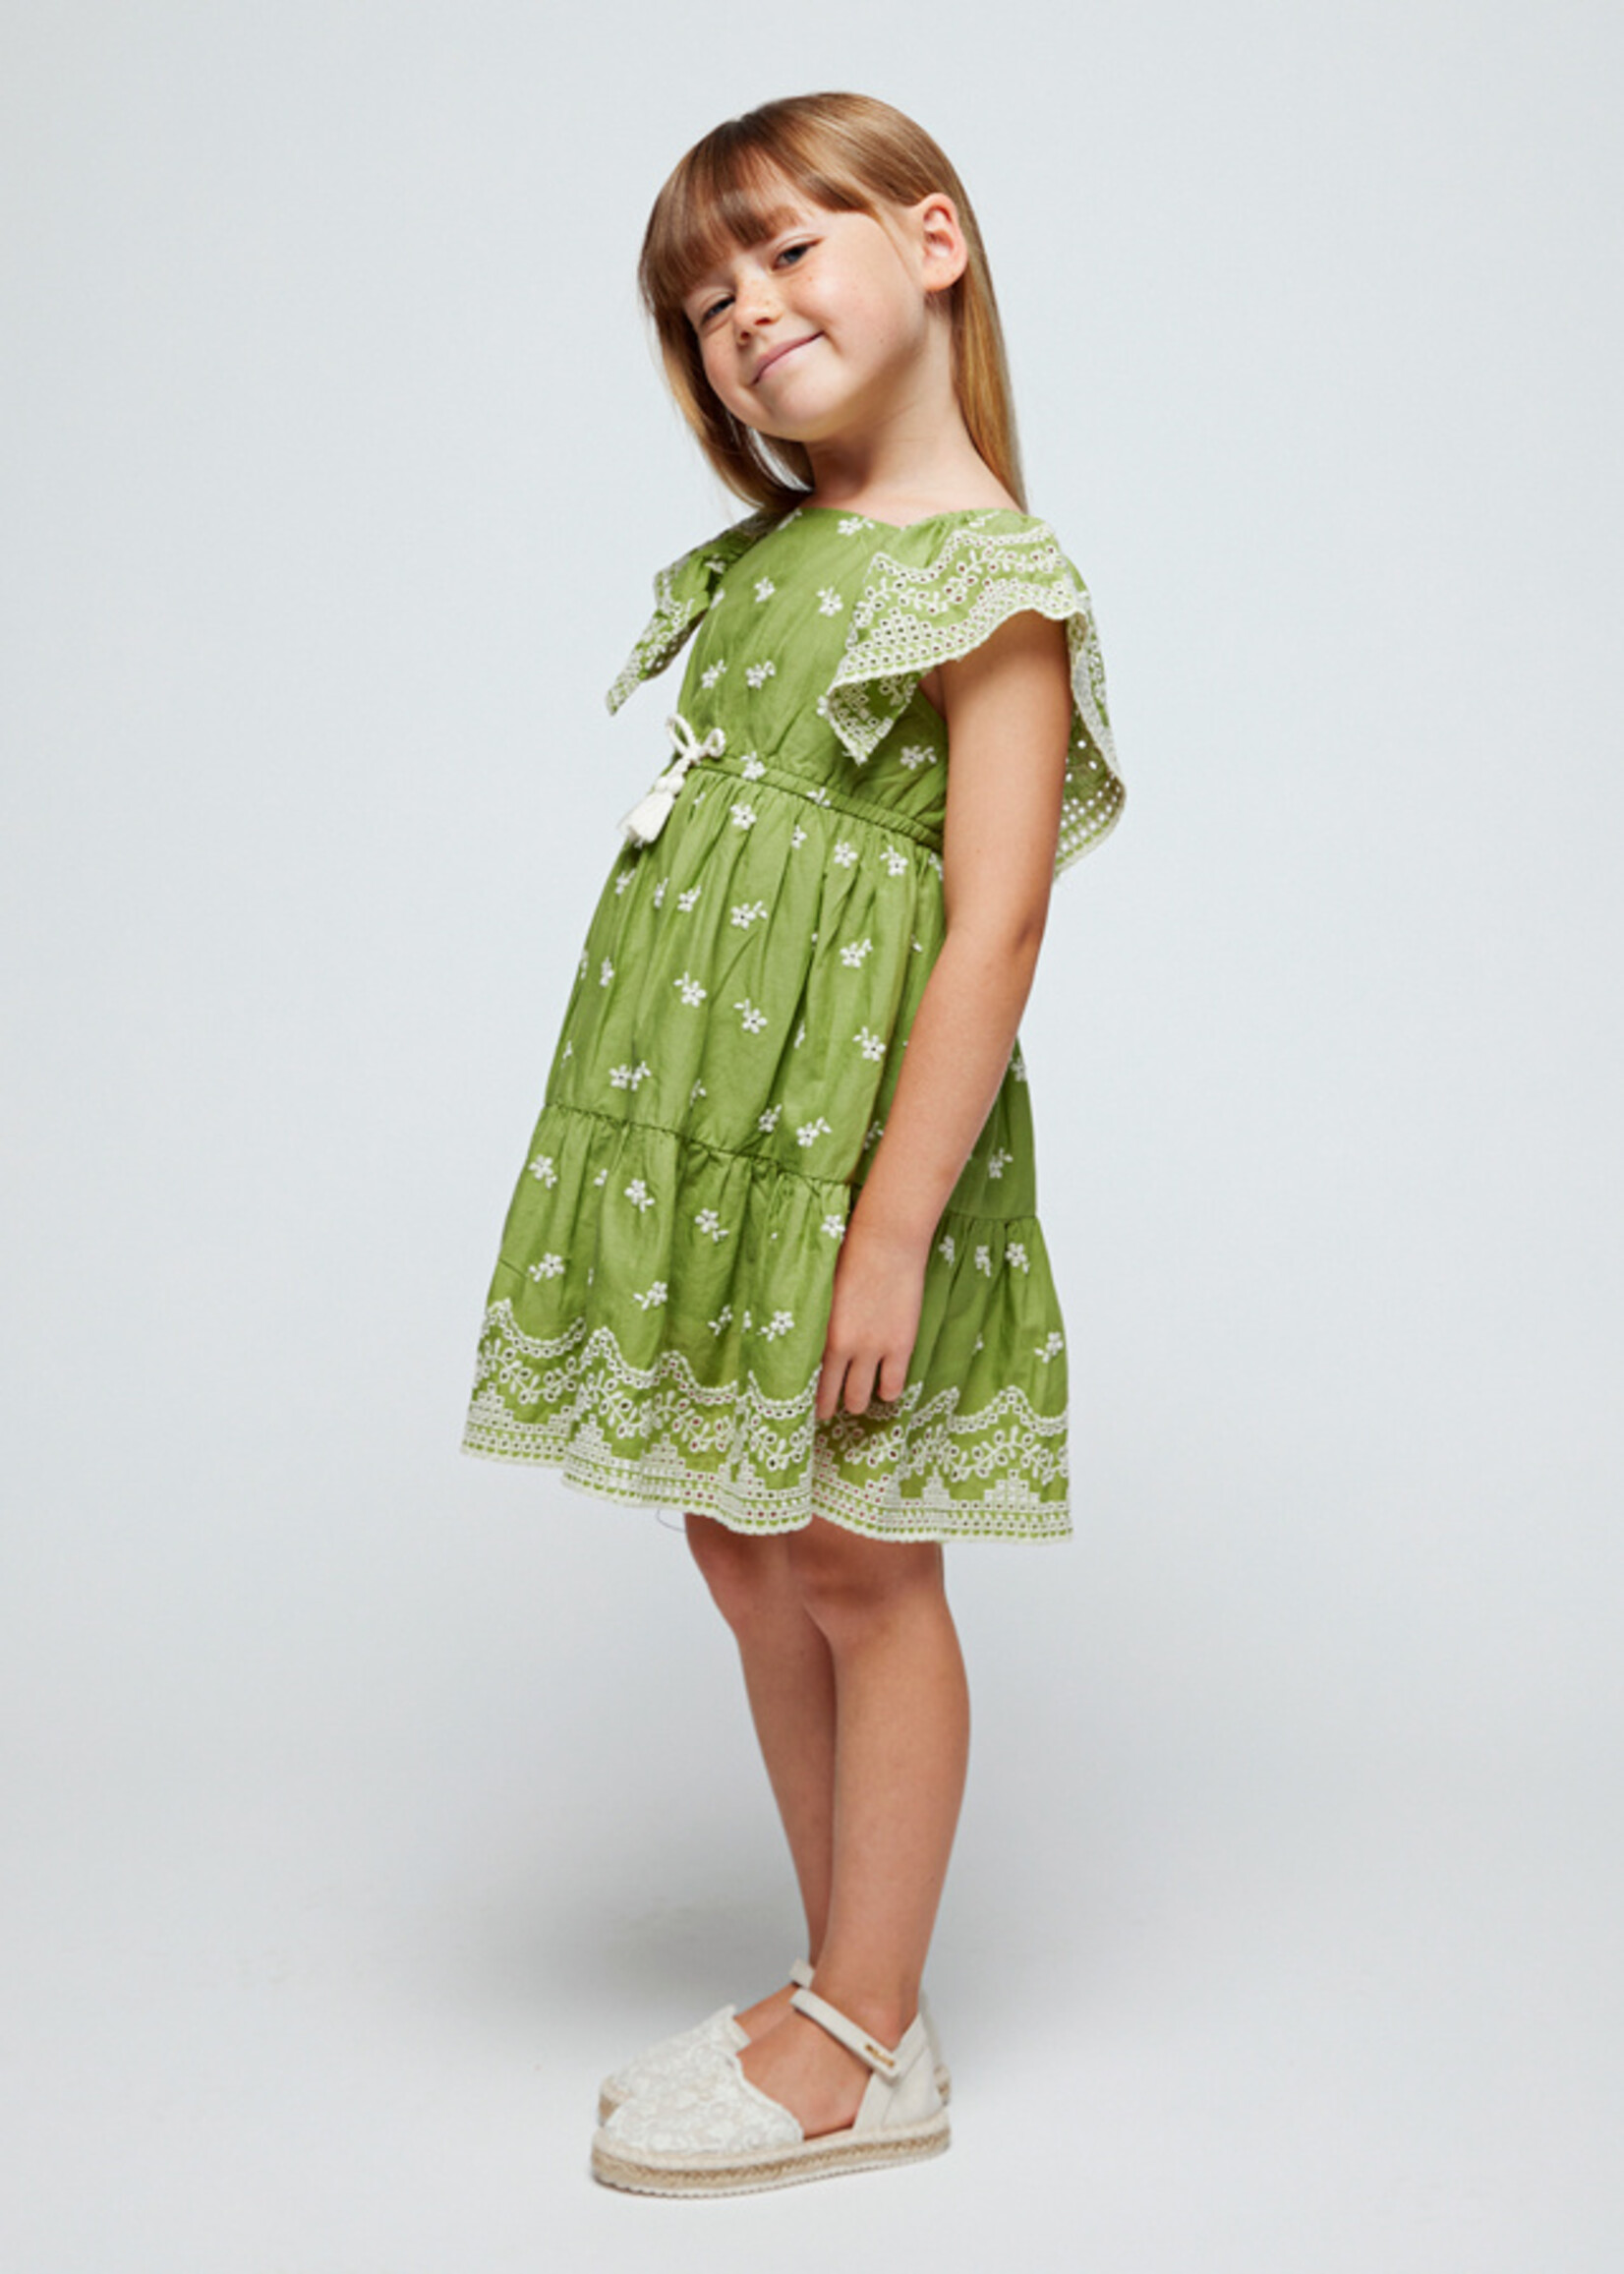 Mayoral Mini Girl            3933 Embroidered dress             Indigo